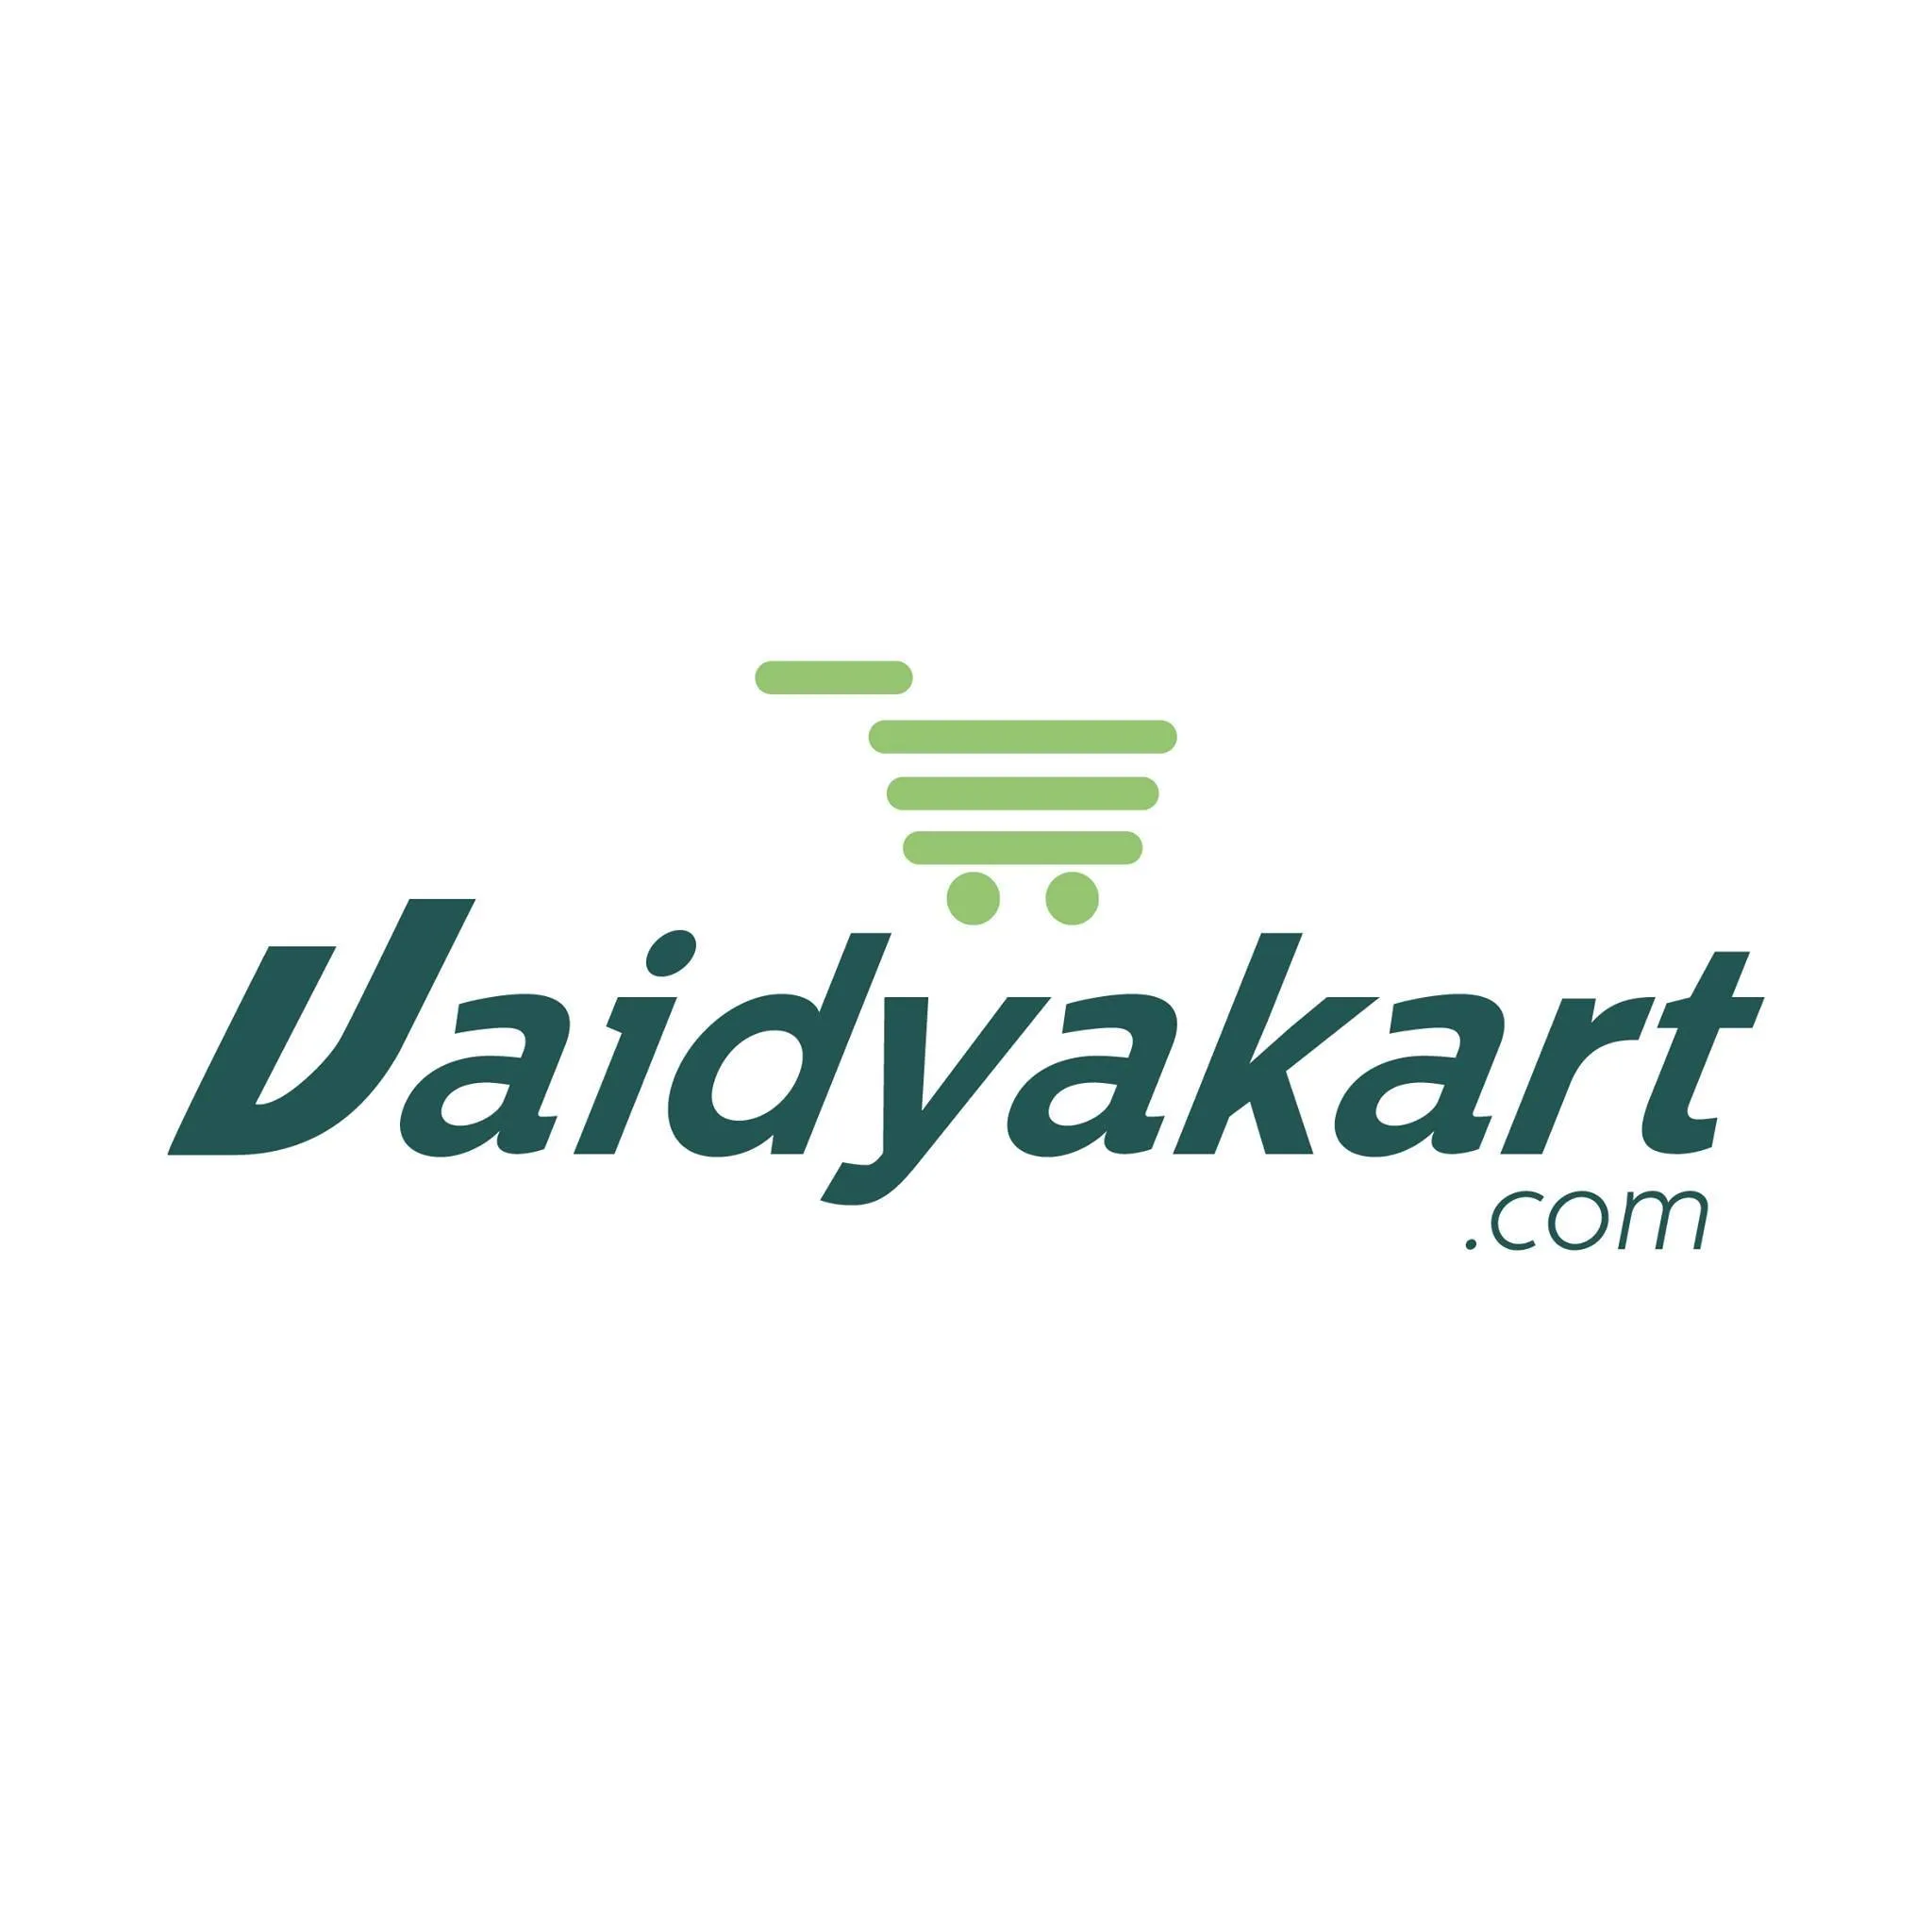 Vaidyakart Company Profile, information, investors, valuation & Funding